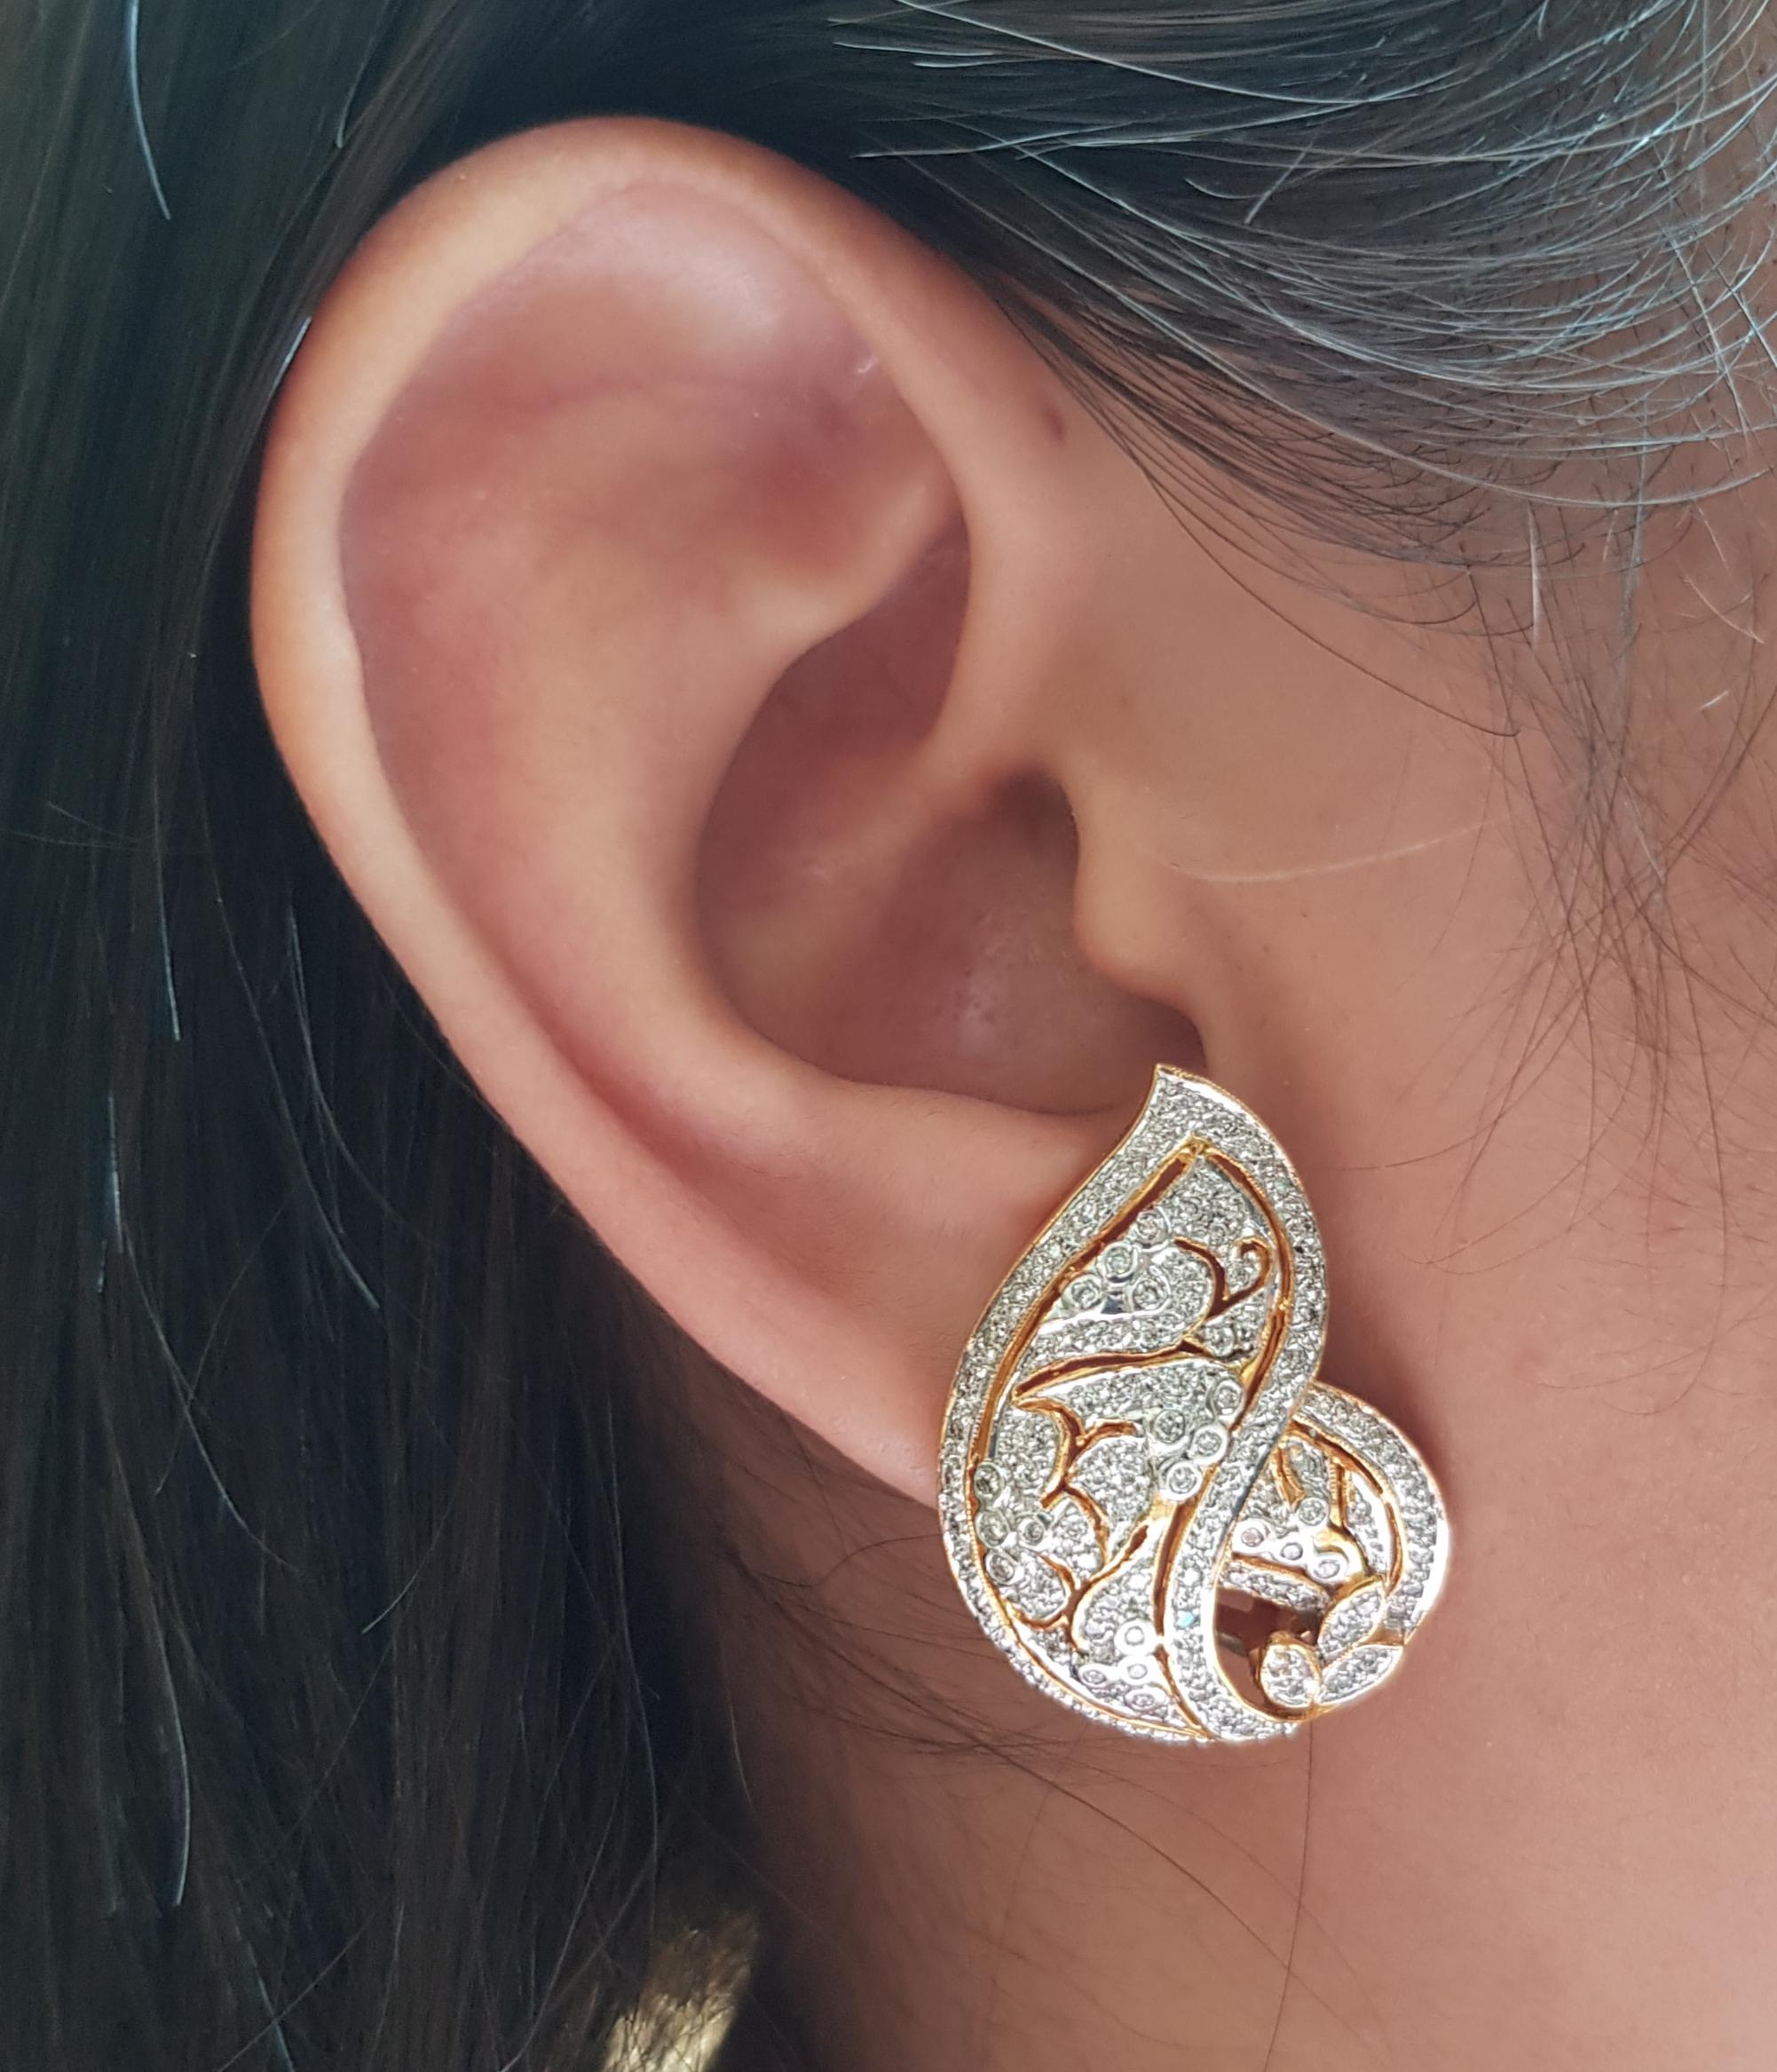 Diamond 0.98 carat Earrings set in 18 Karat Gold Settings

Width:  2.0 cm 
Length: 3.0 cm
Total Weight: 16.04 grams

